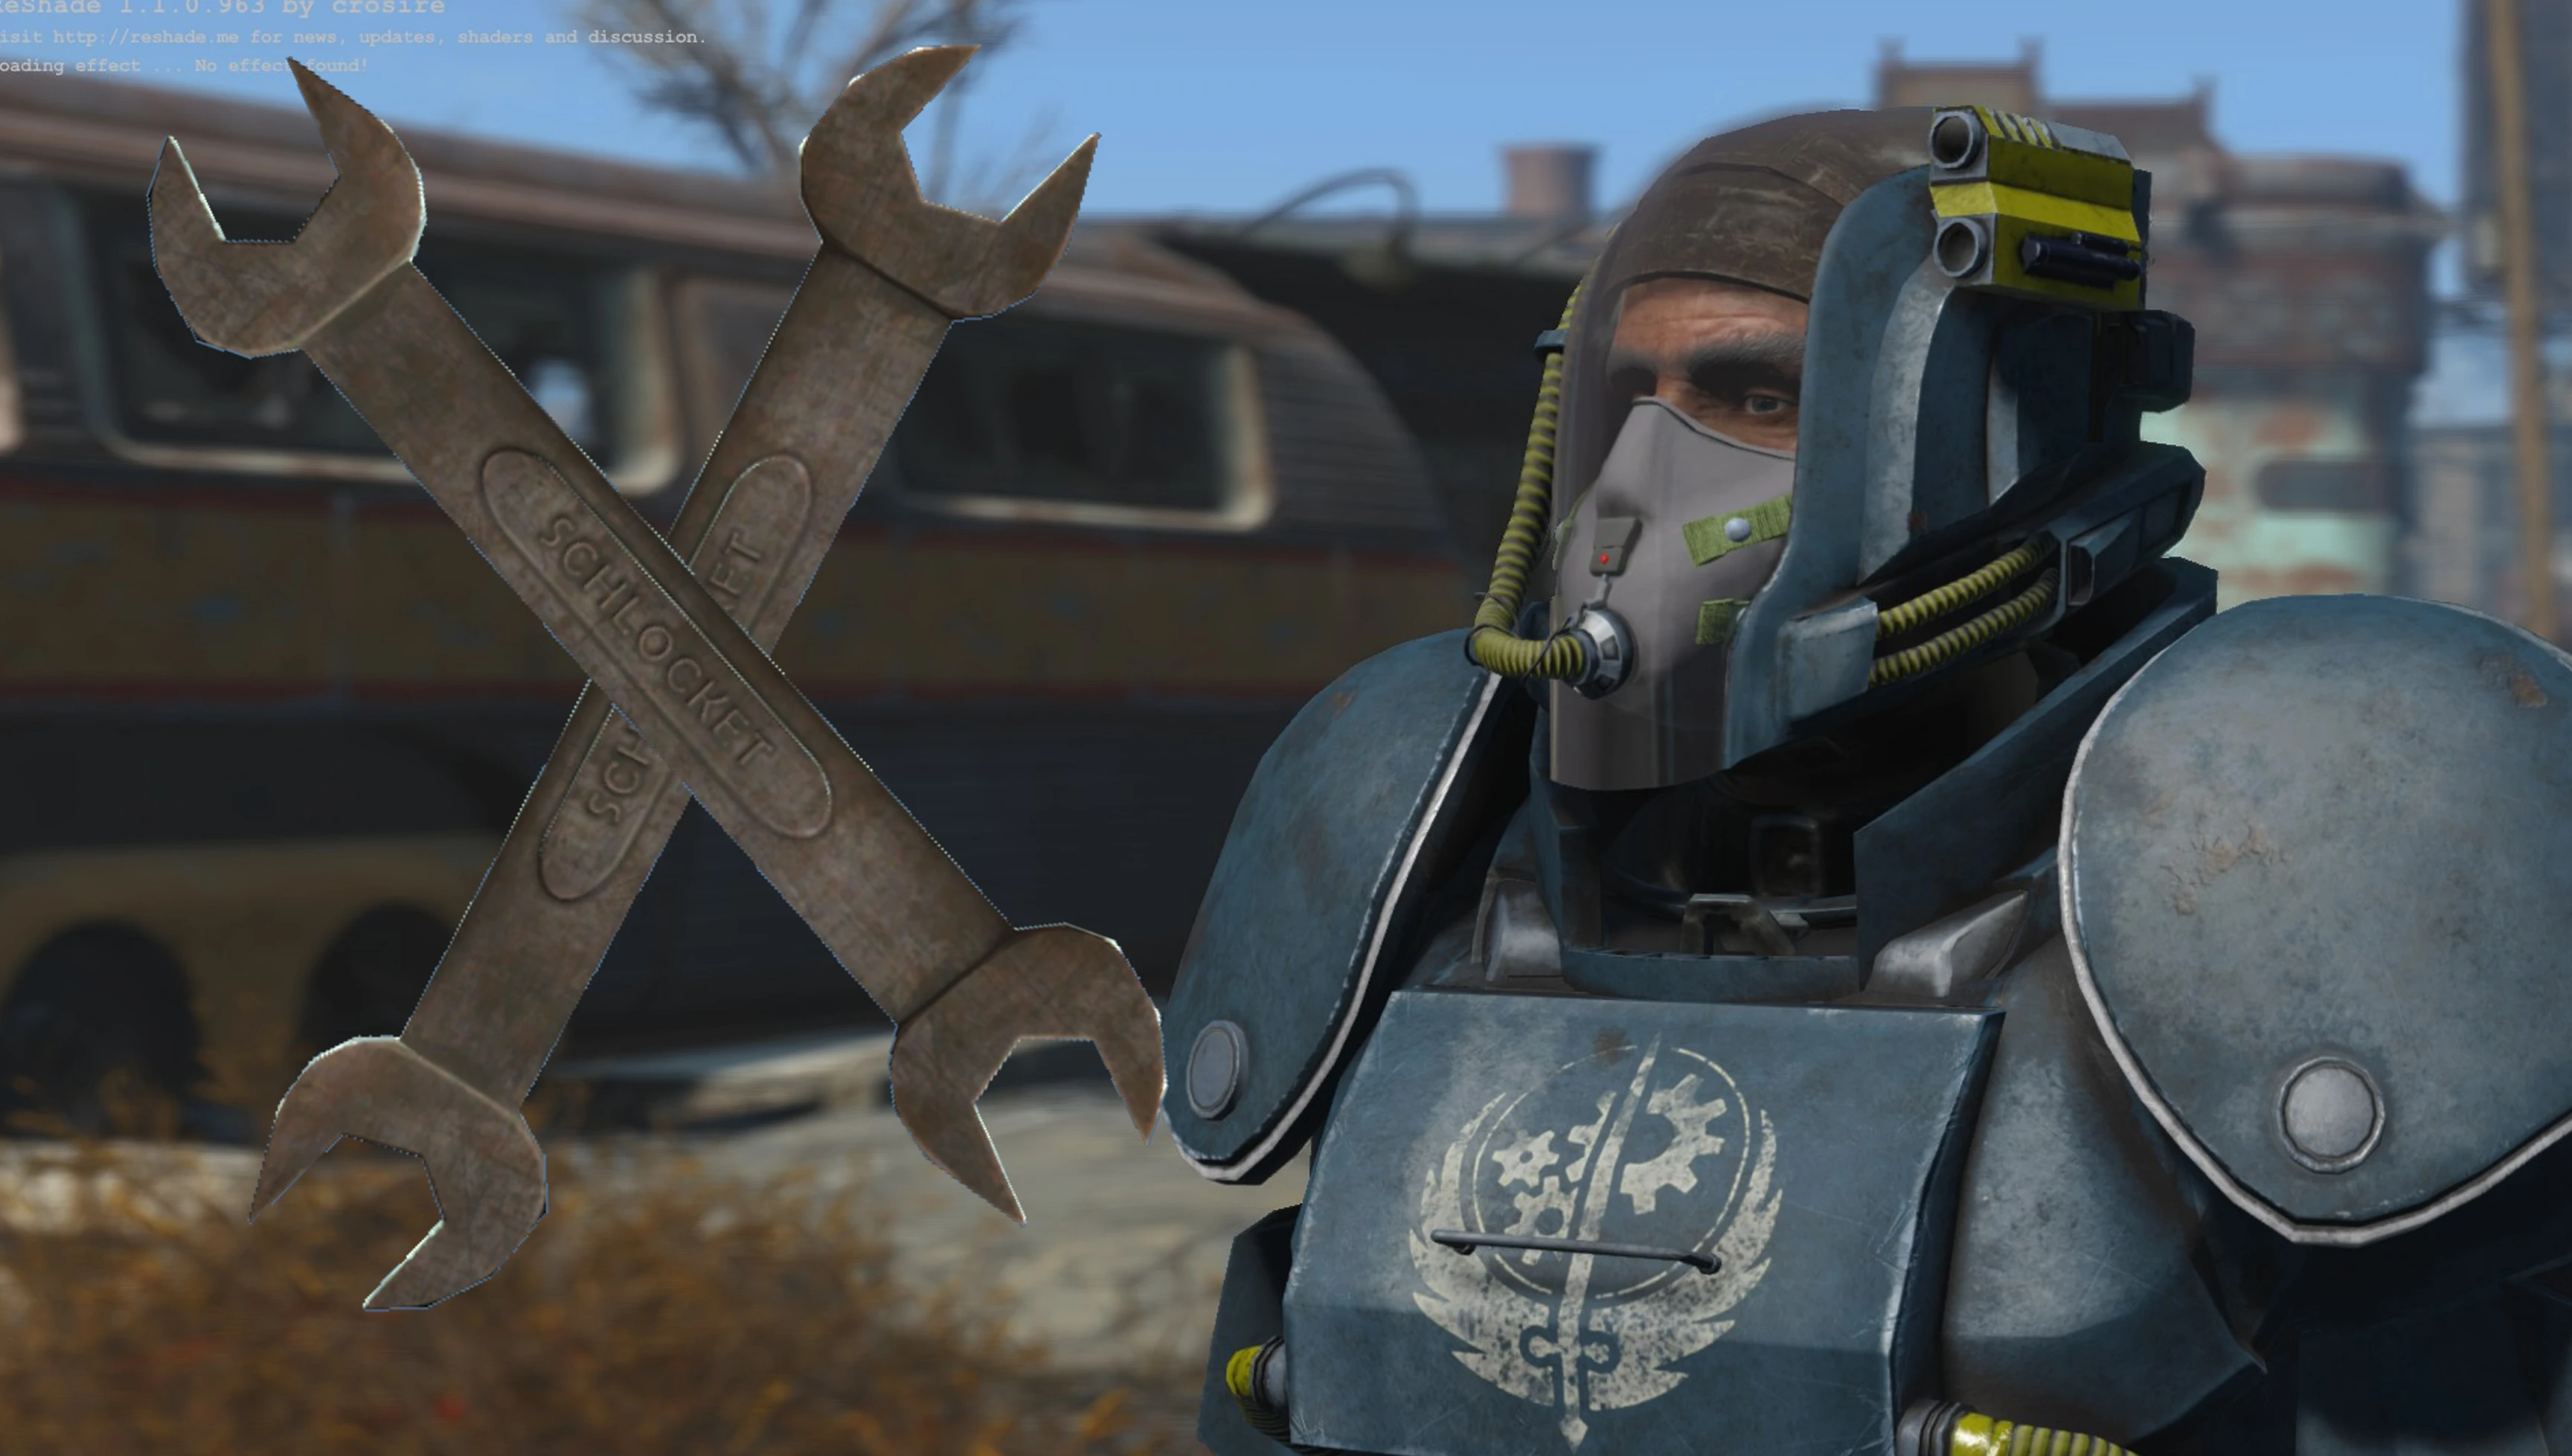 Brotherhood 4. Боевая броня братства стали Fallout 76. B-35c Heavy Brotherhood of Steel Armor. Фоллаут 4 братство стали. Боевая броня братства стали Fallout 4.